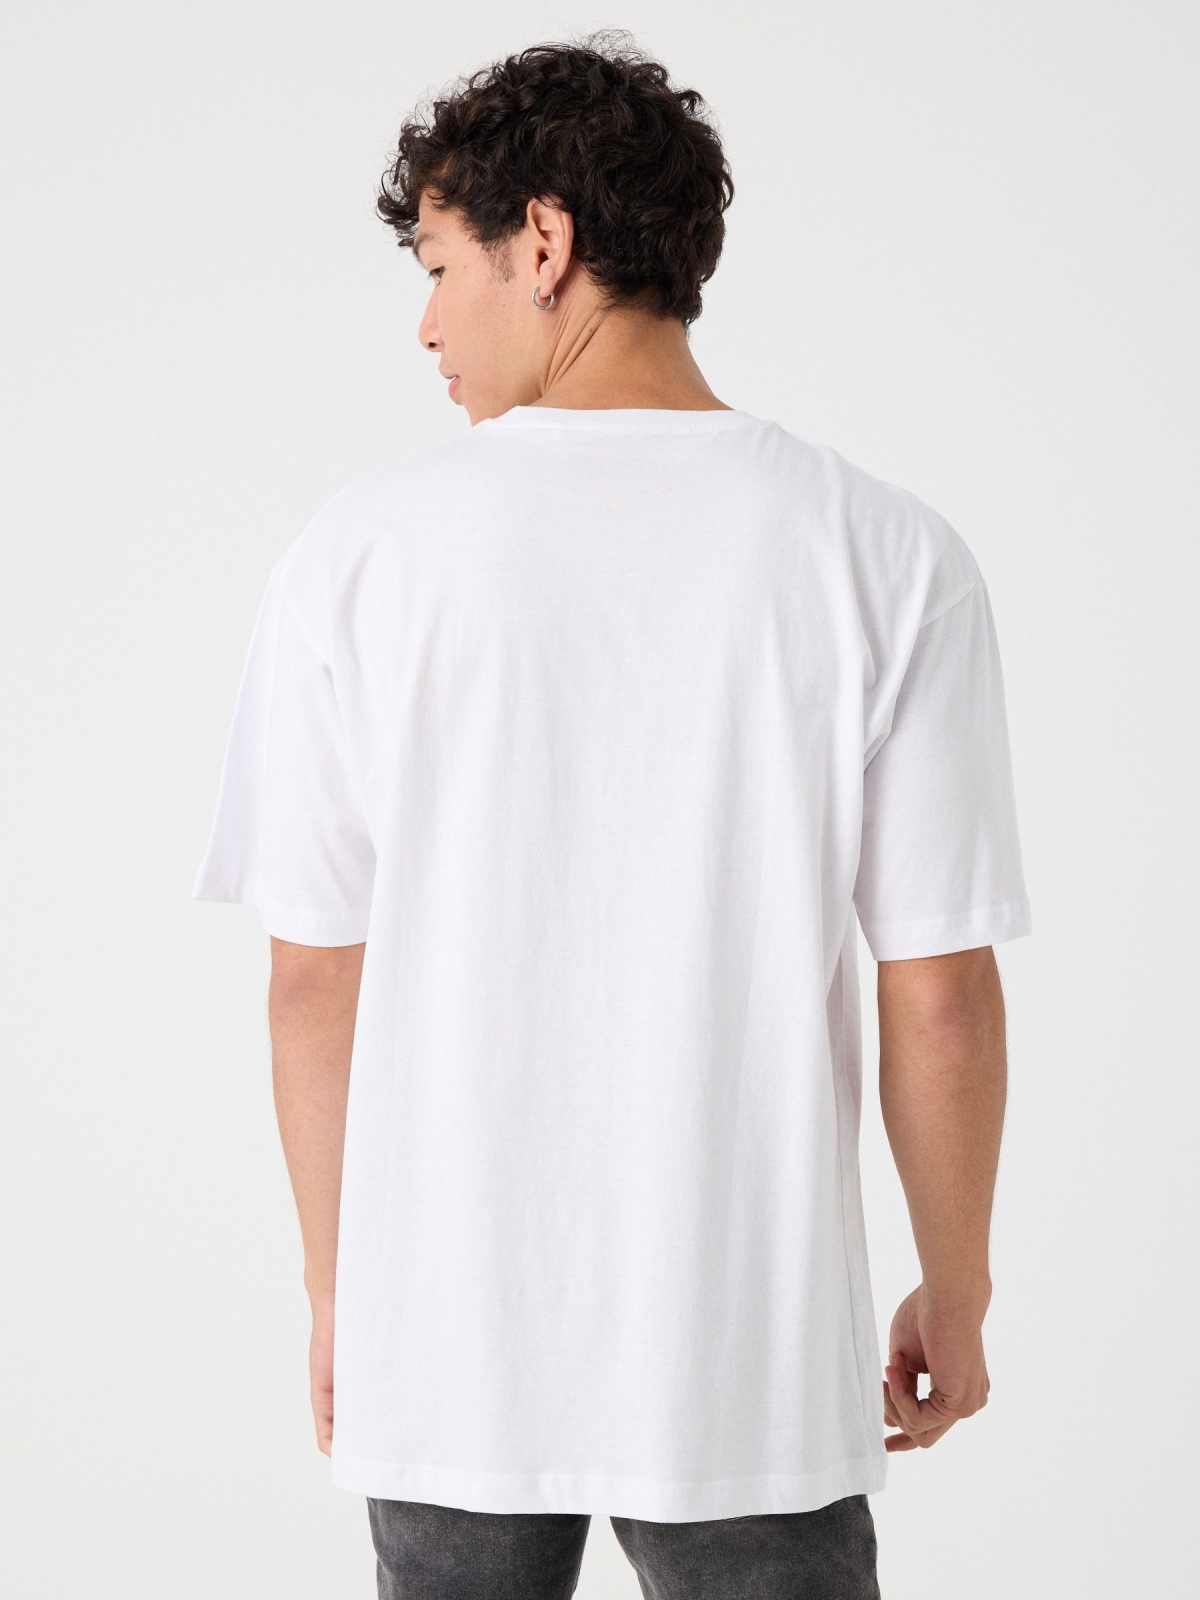 Camiseta blanca estampada blanco vista media trasera